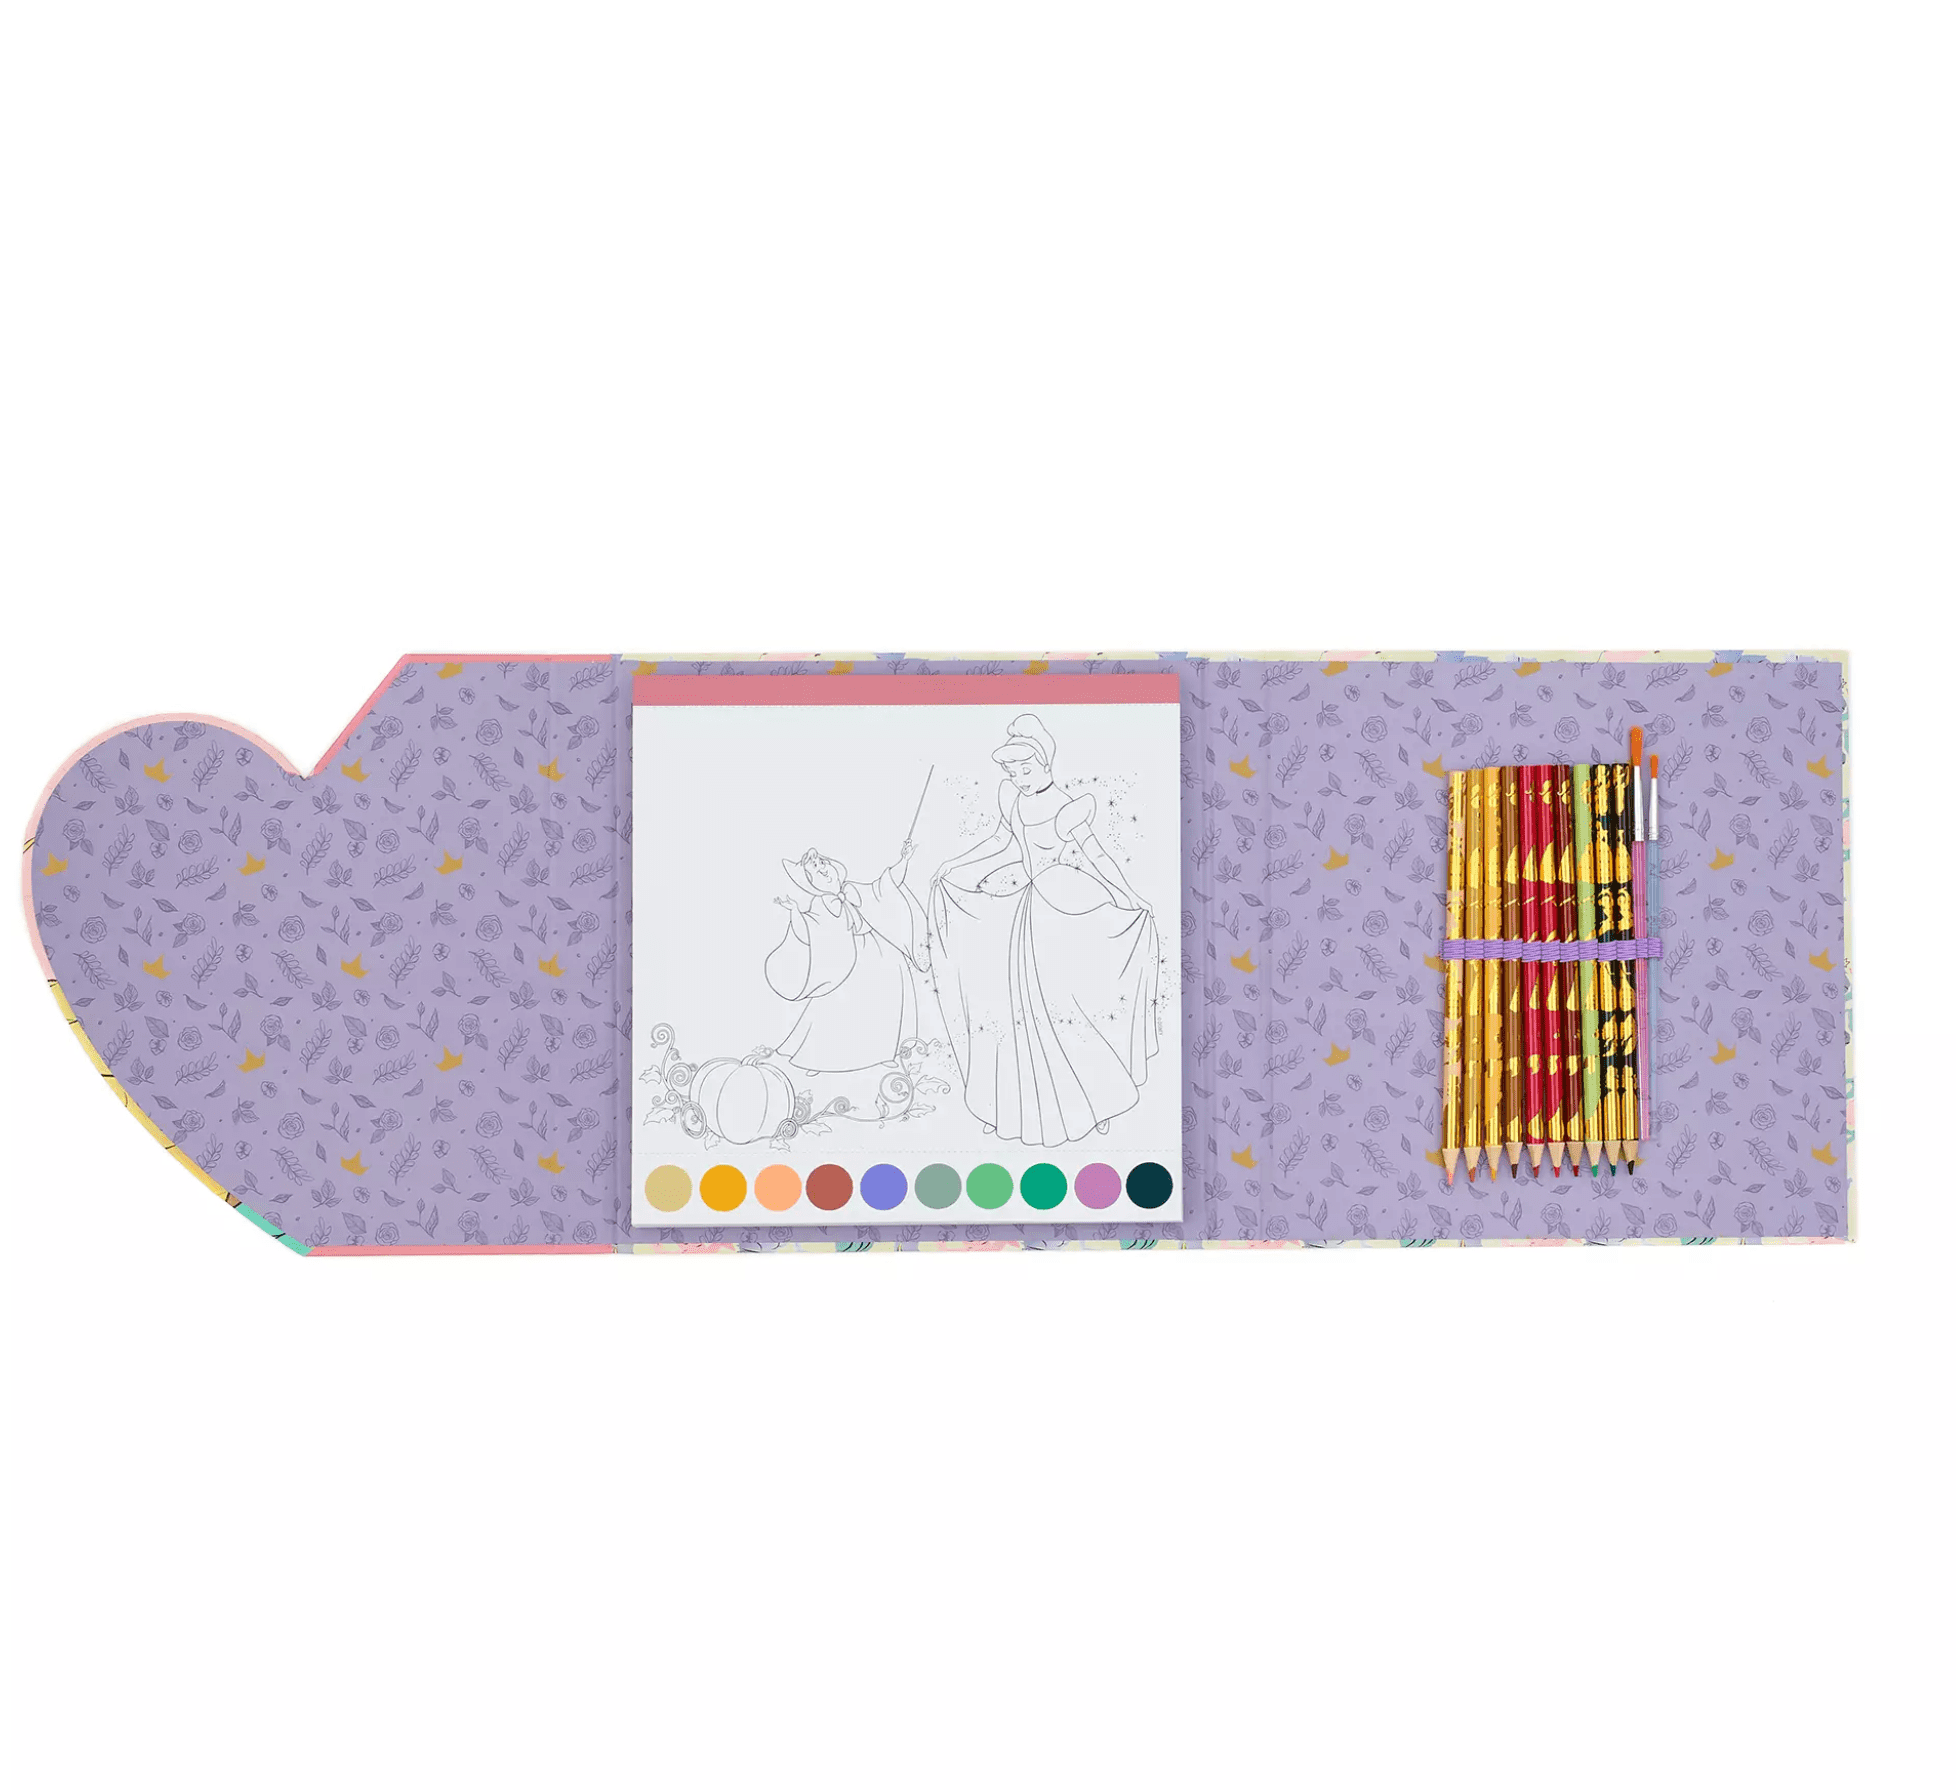 Disney Stitch Art Set for Kids 130+ Pieces Frozen Colouring Pencils Colouring Crayons Princess Art Supplies Stitch Gifts (Multi Stitch Set)